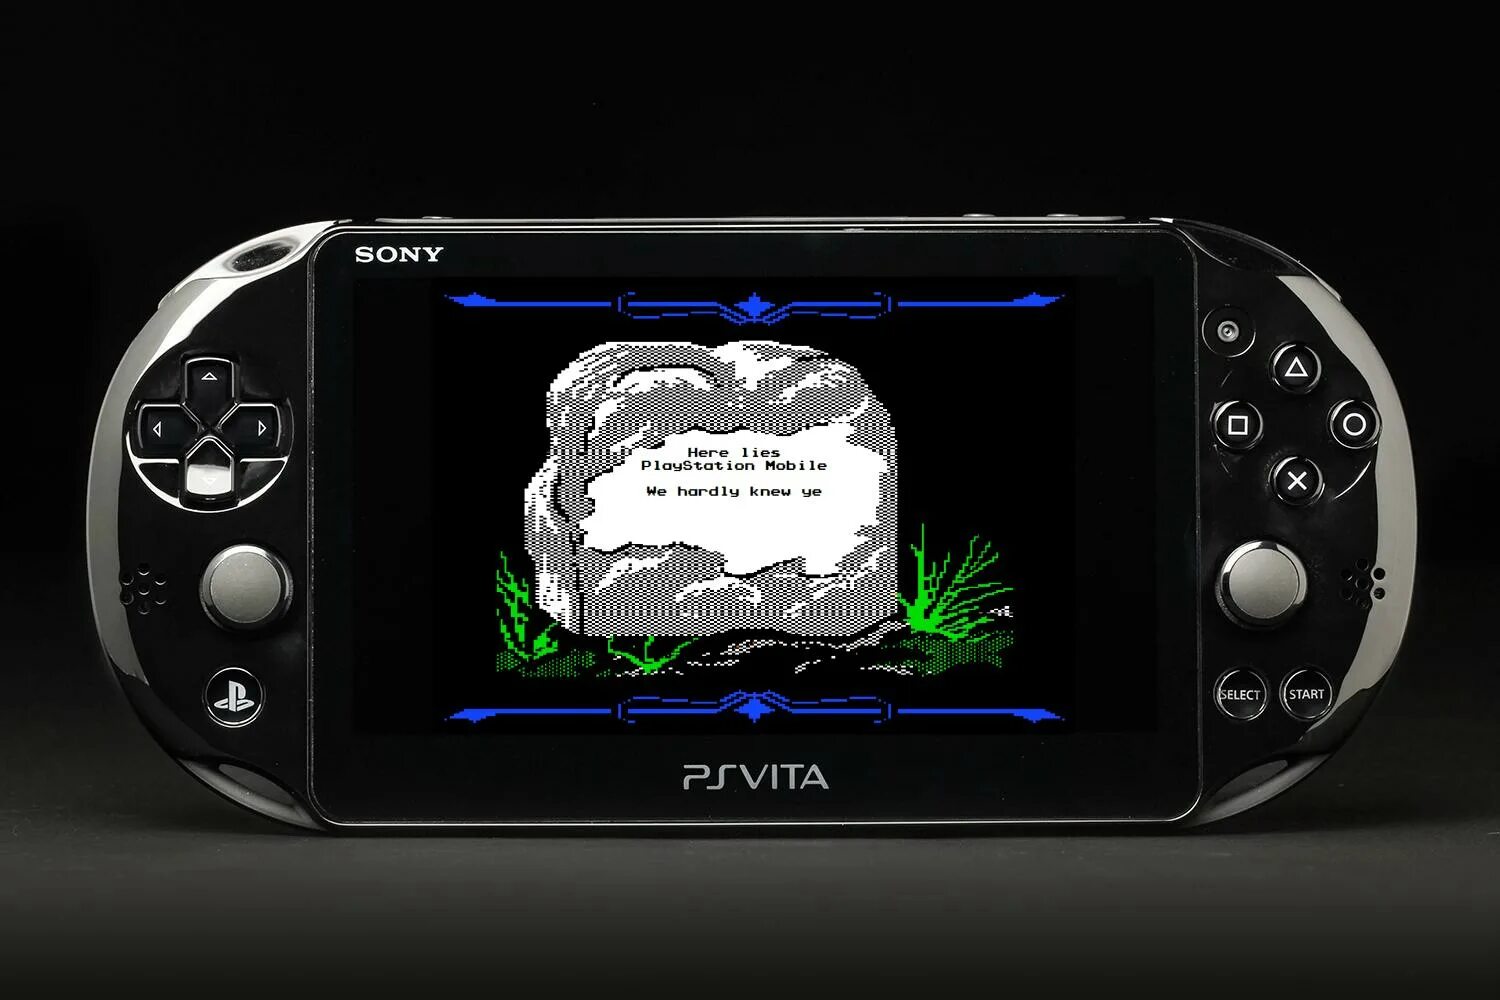 Playstation mobile. Sony mobile PS. PLAYSTATION mobile PS Vita. PS mobile игры на PS Vita. Мобильные игры PS mobile.